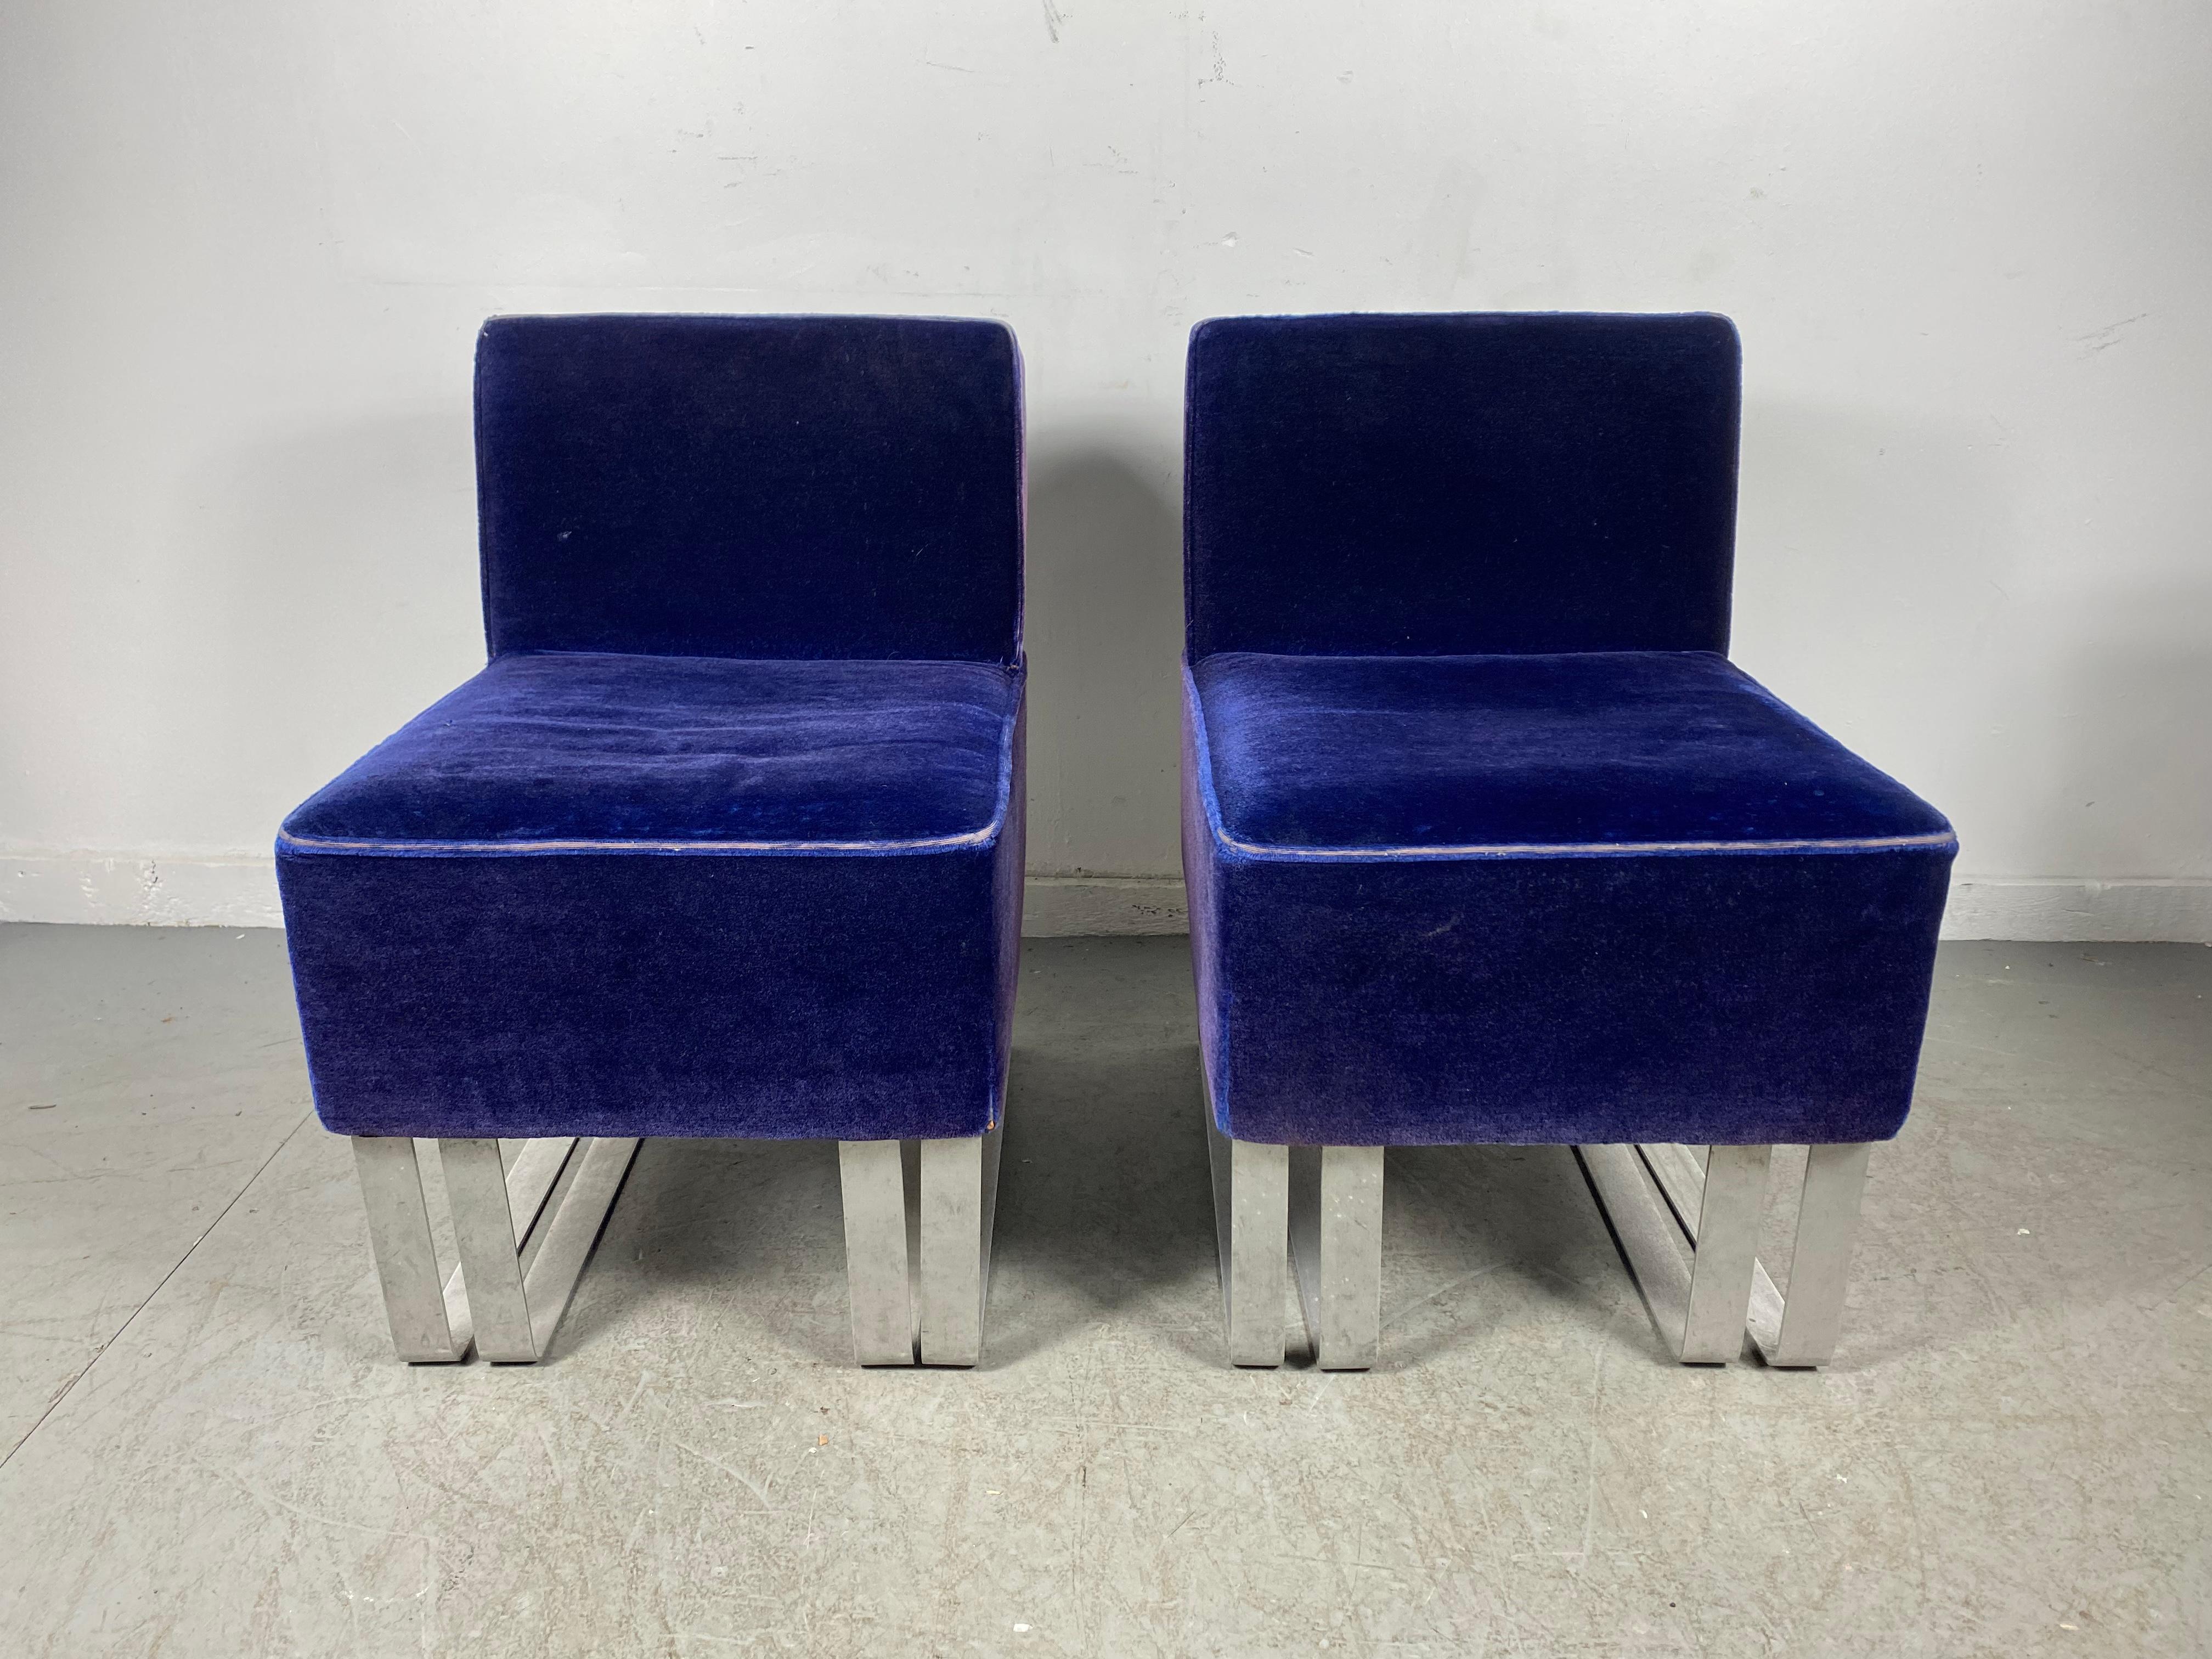 Rare Modernist Slipper Chairs by Donald Deskey for Deskey -Vollmer For Sale 1